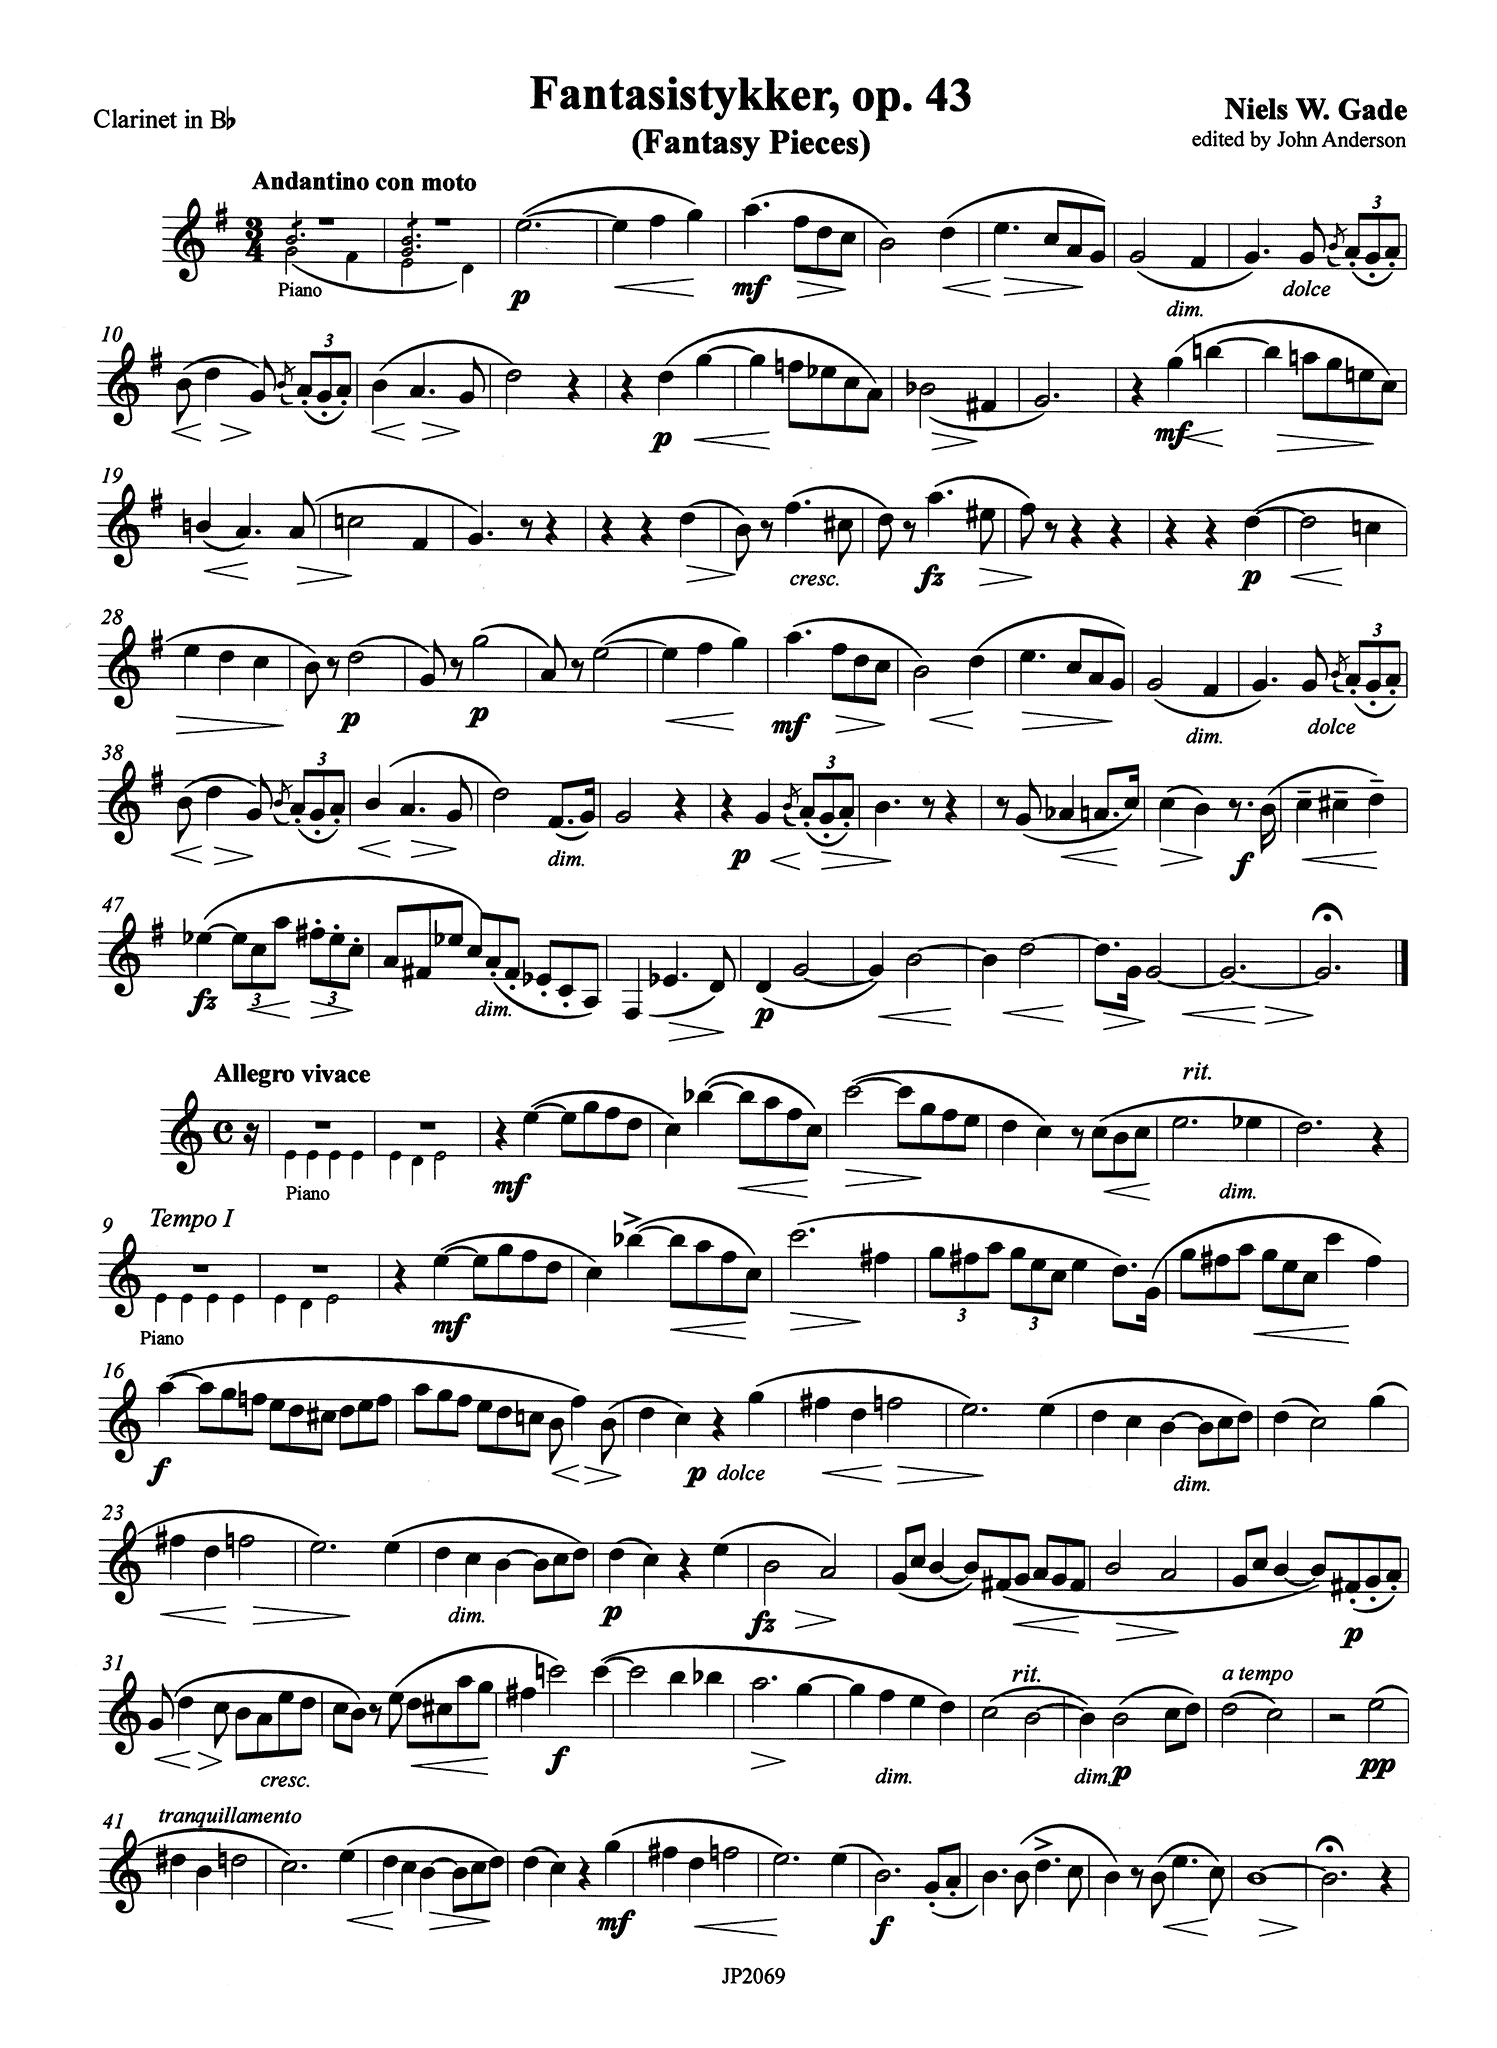 Gade, Niels_Fantasystykker, Op. 43